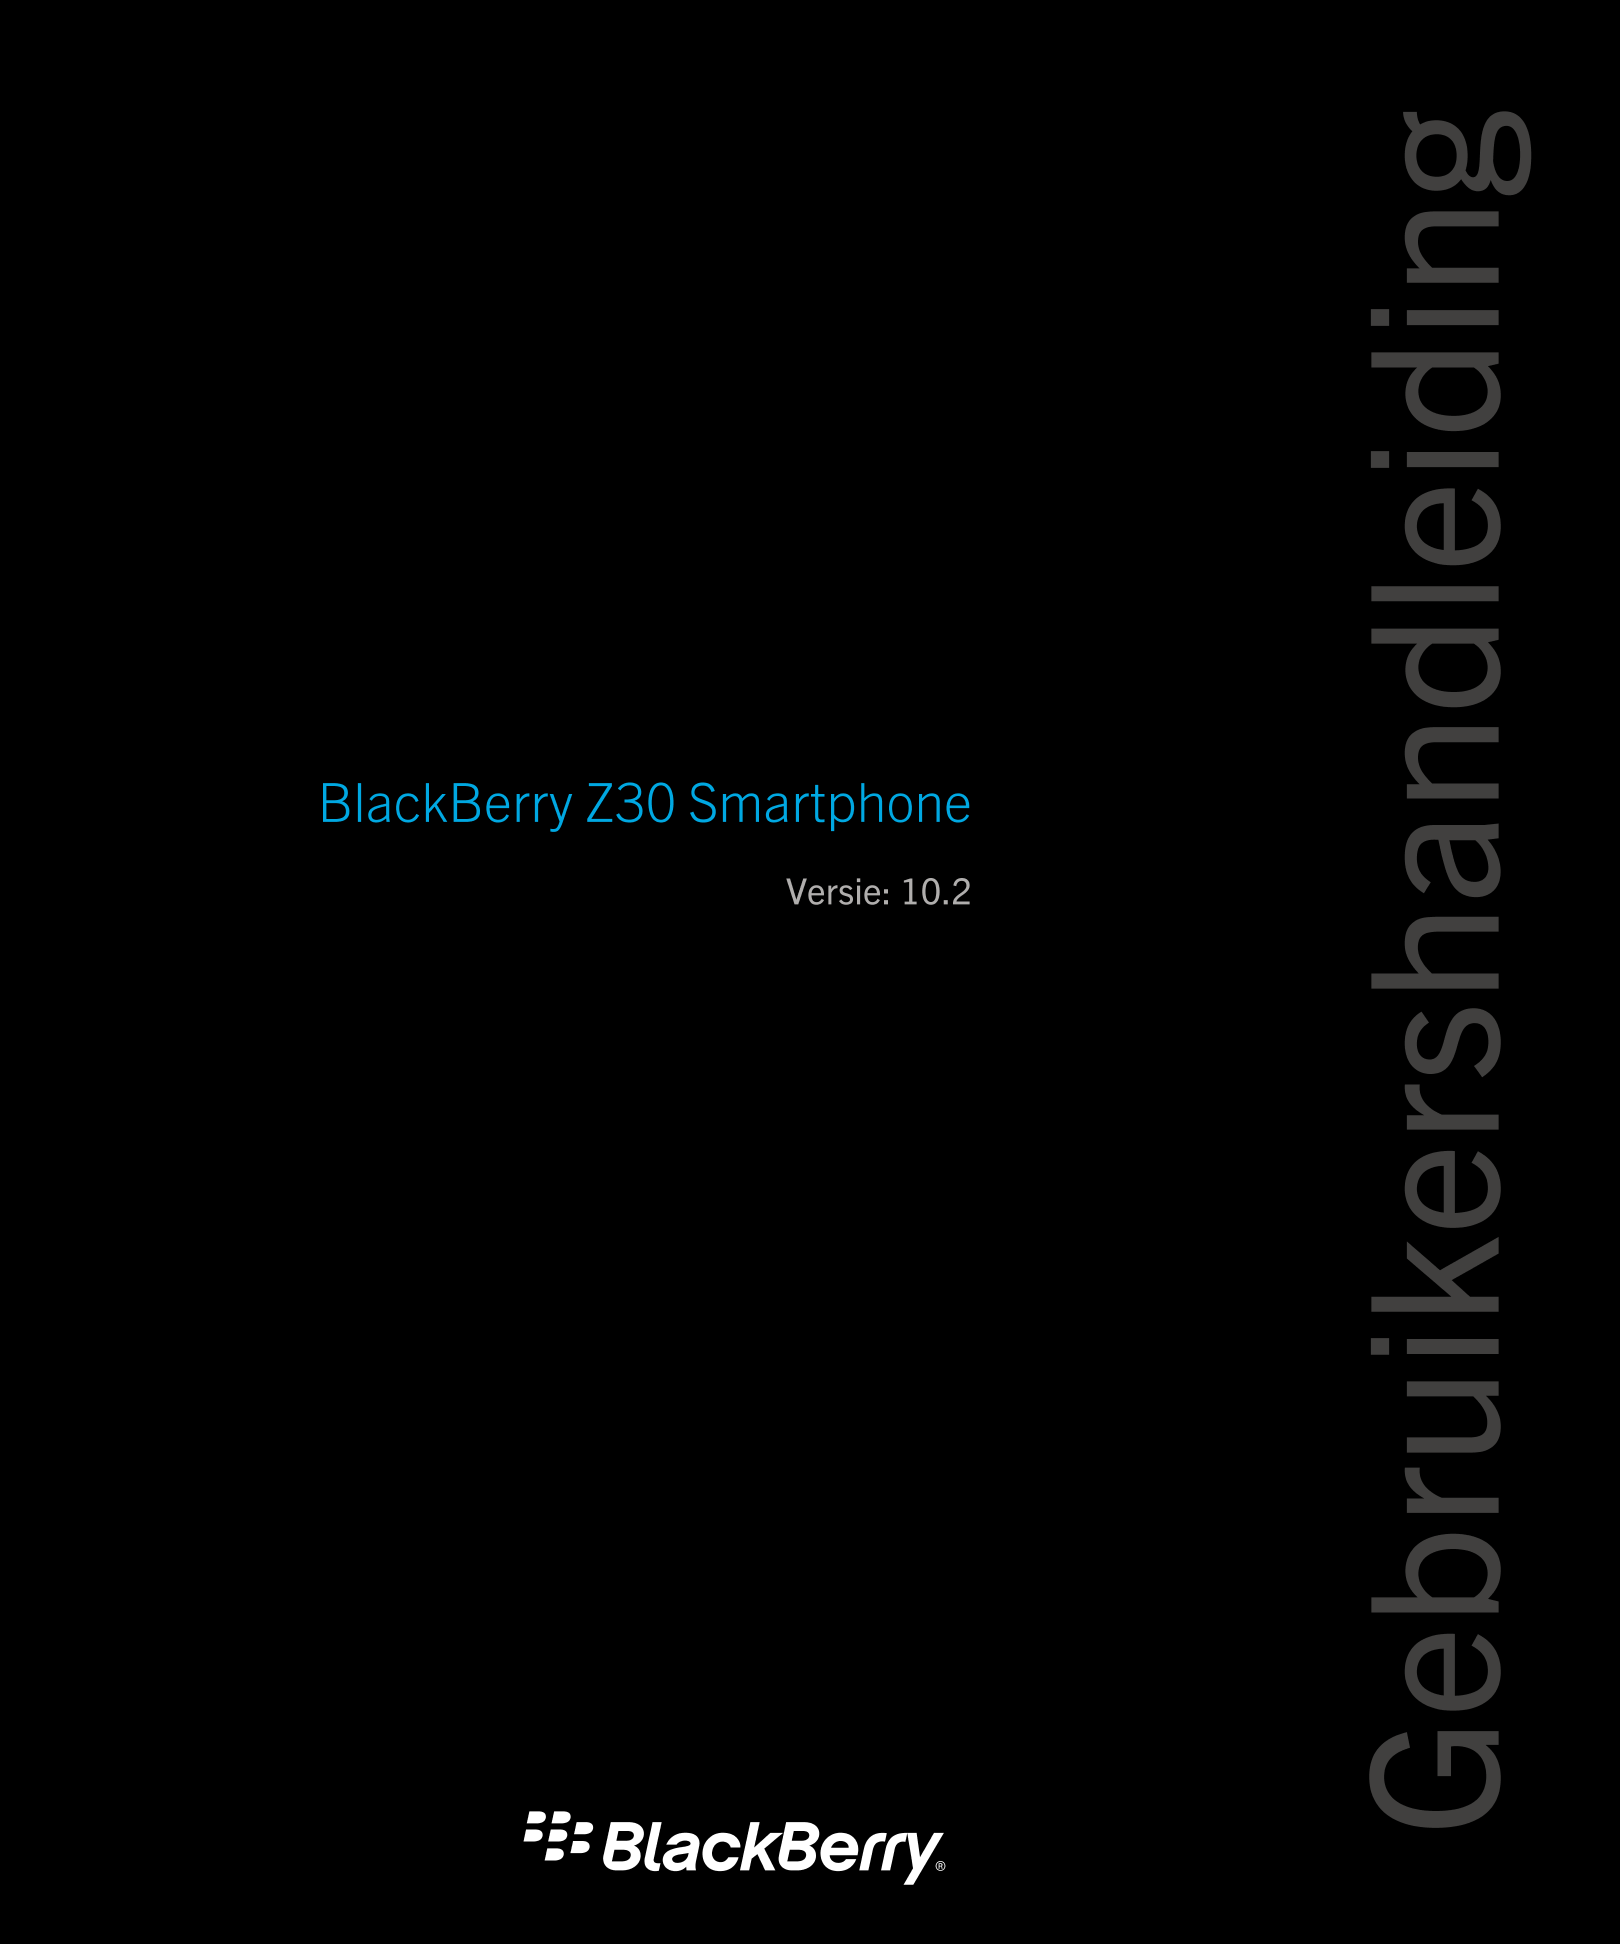 Gebruikershandleiding
BlackBerry Z30 Smartphone
Versie: 10.2